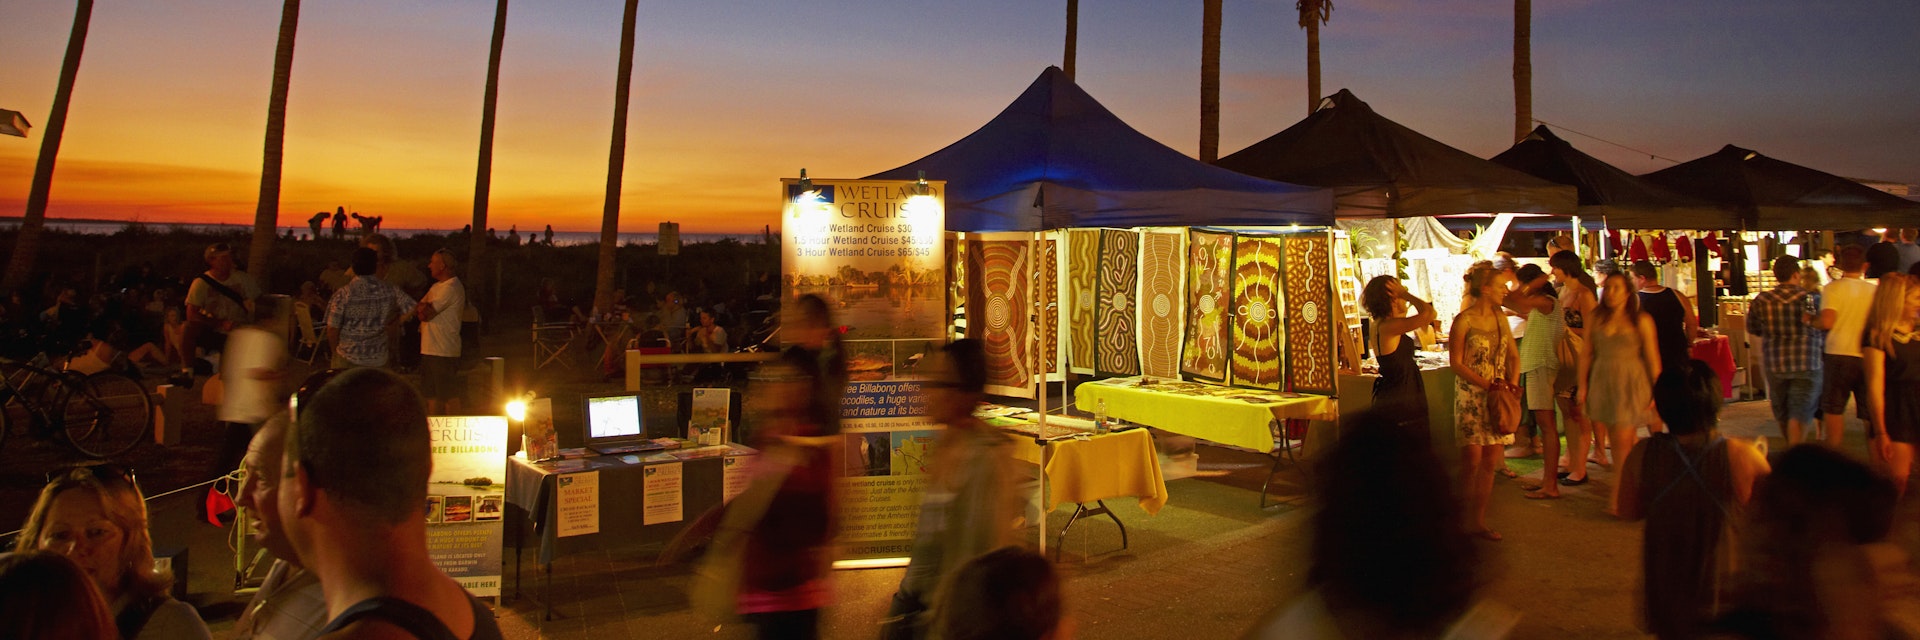 Stalls at Mindil Beach Sunset Market, Darwin, Northern Territory, Australia